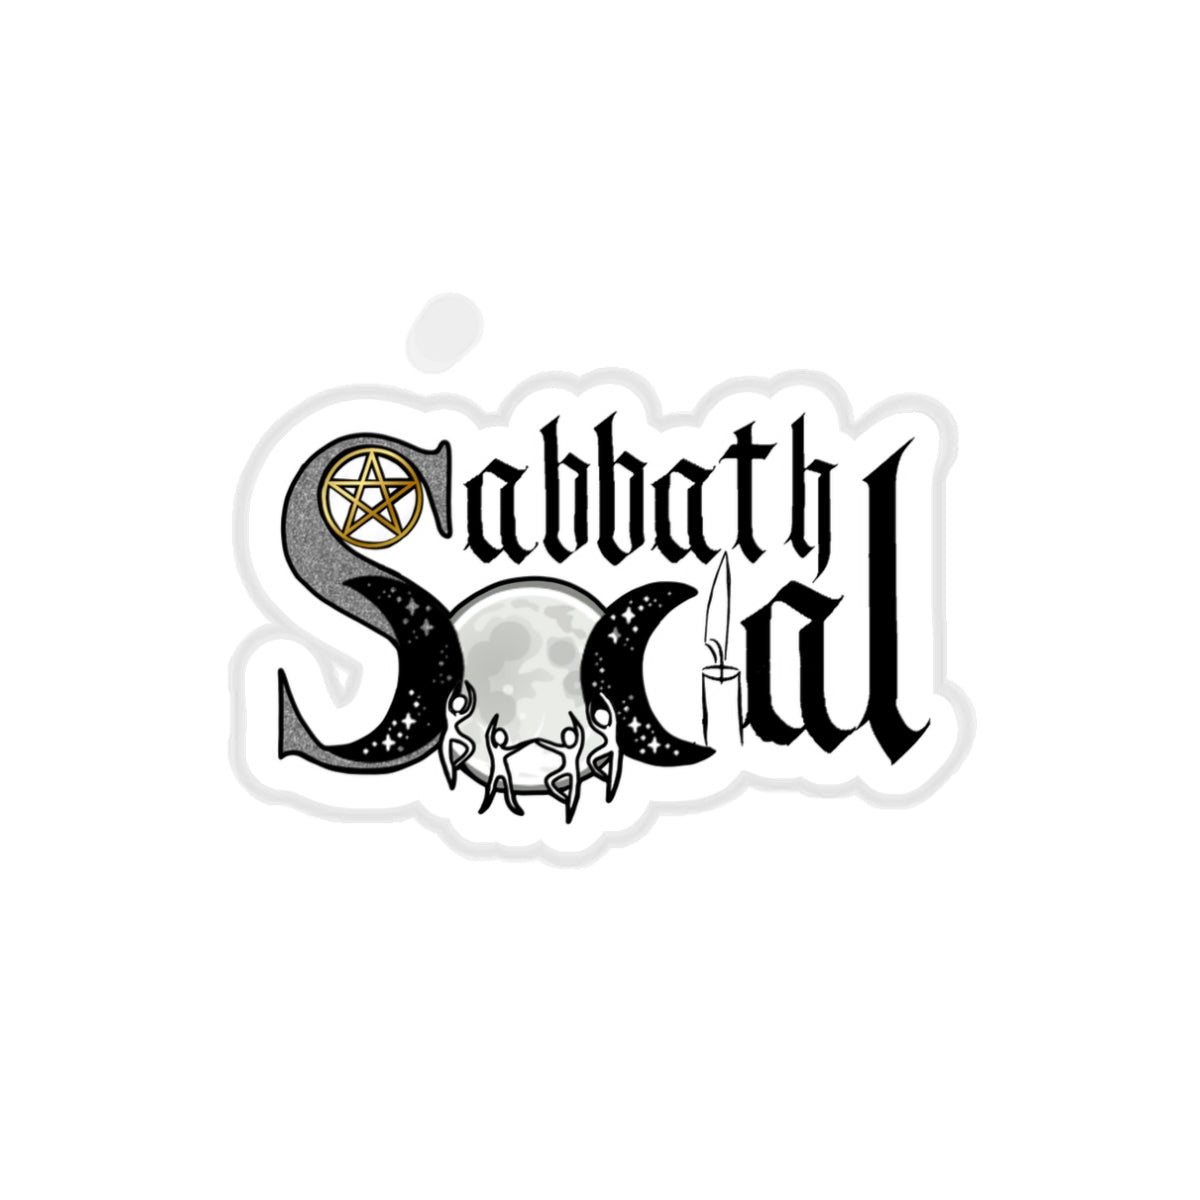 Sabbath Social Logo Stickers